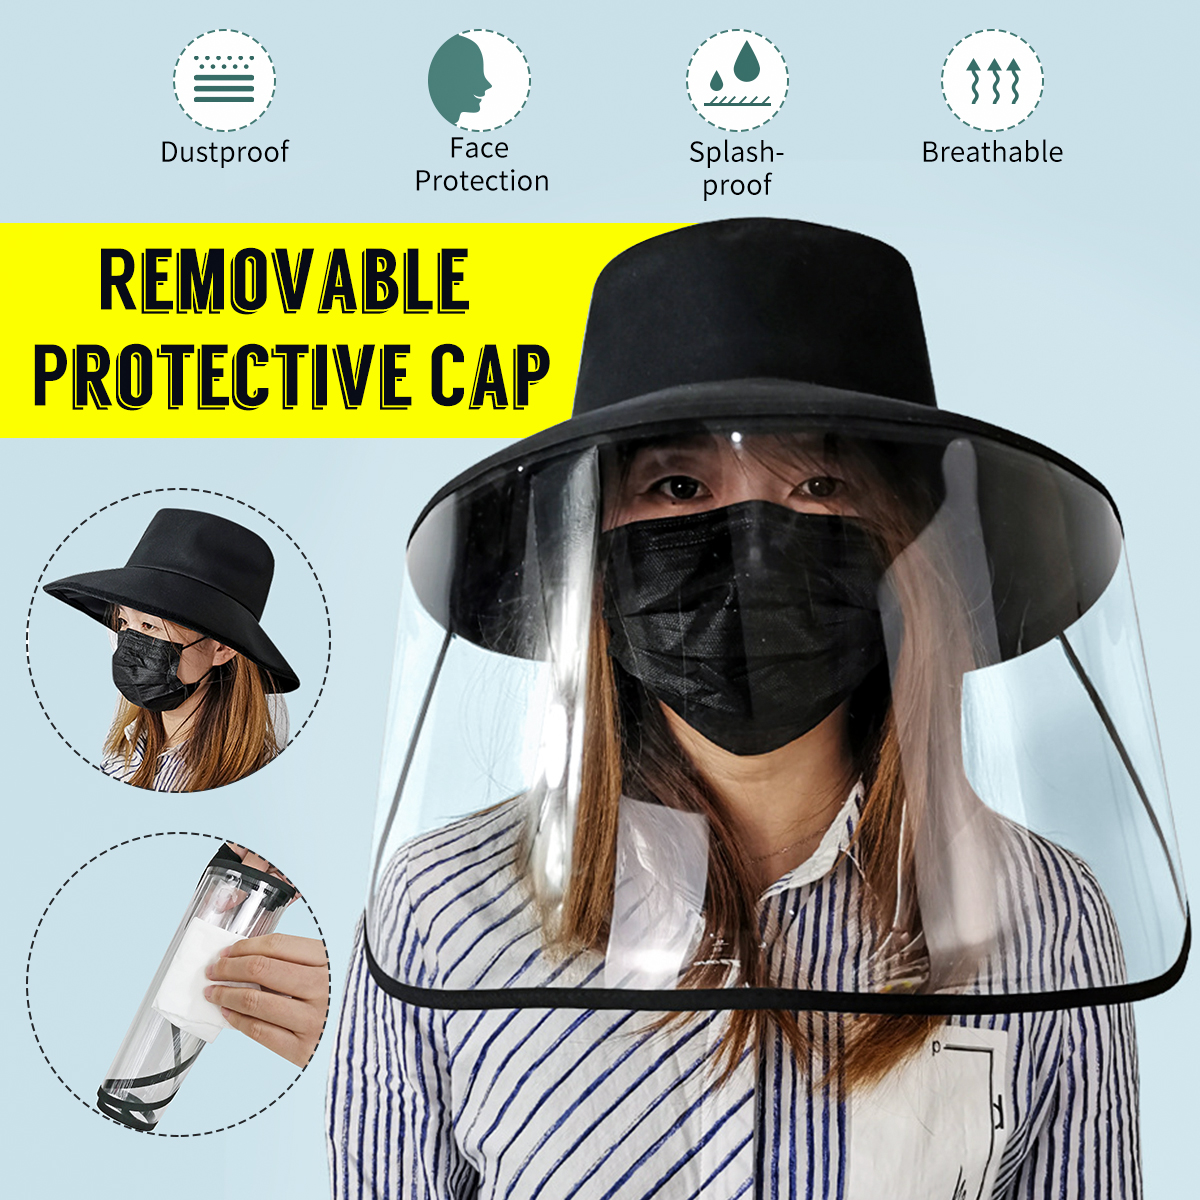 58cm-Removable-Protective-Cap-Anti-fog-Hat-Dustproof-Face-Protection-Fisherman-Cap-1650217-1